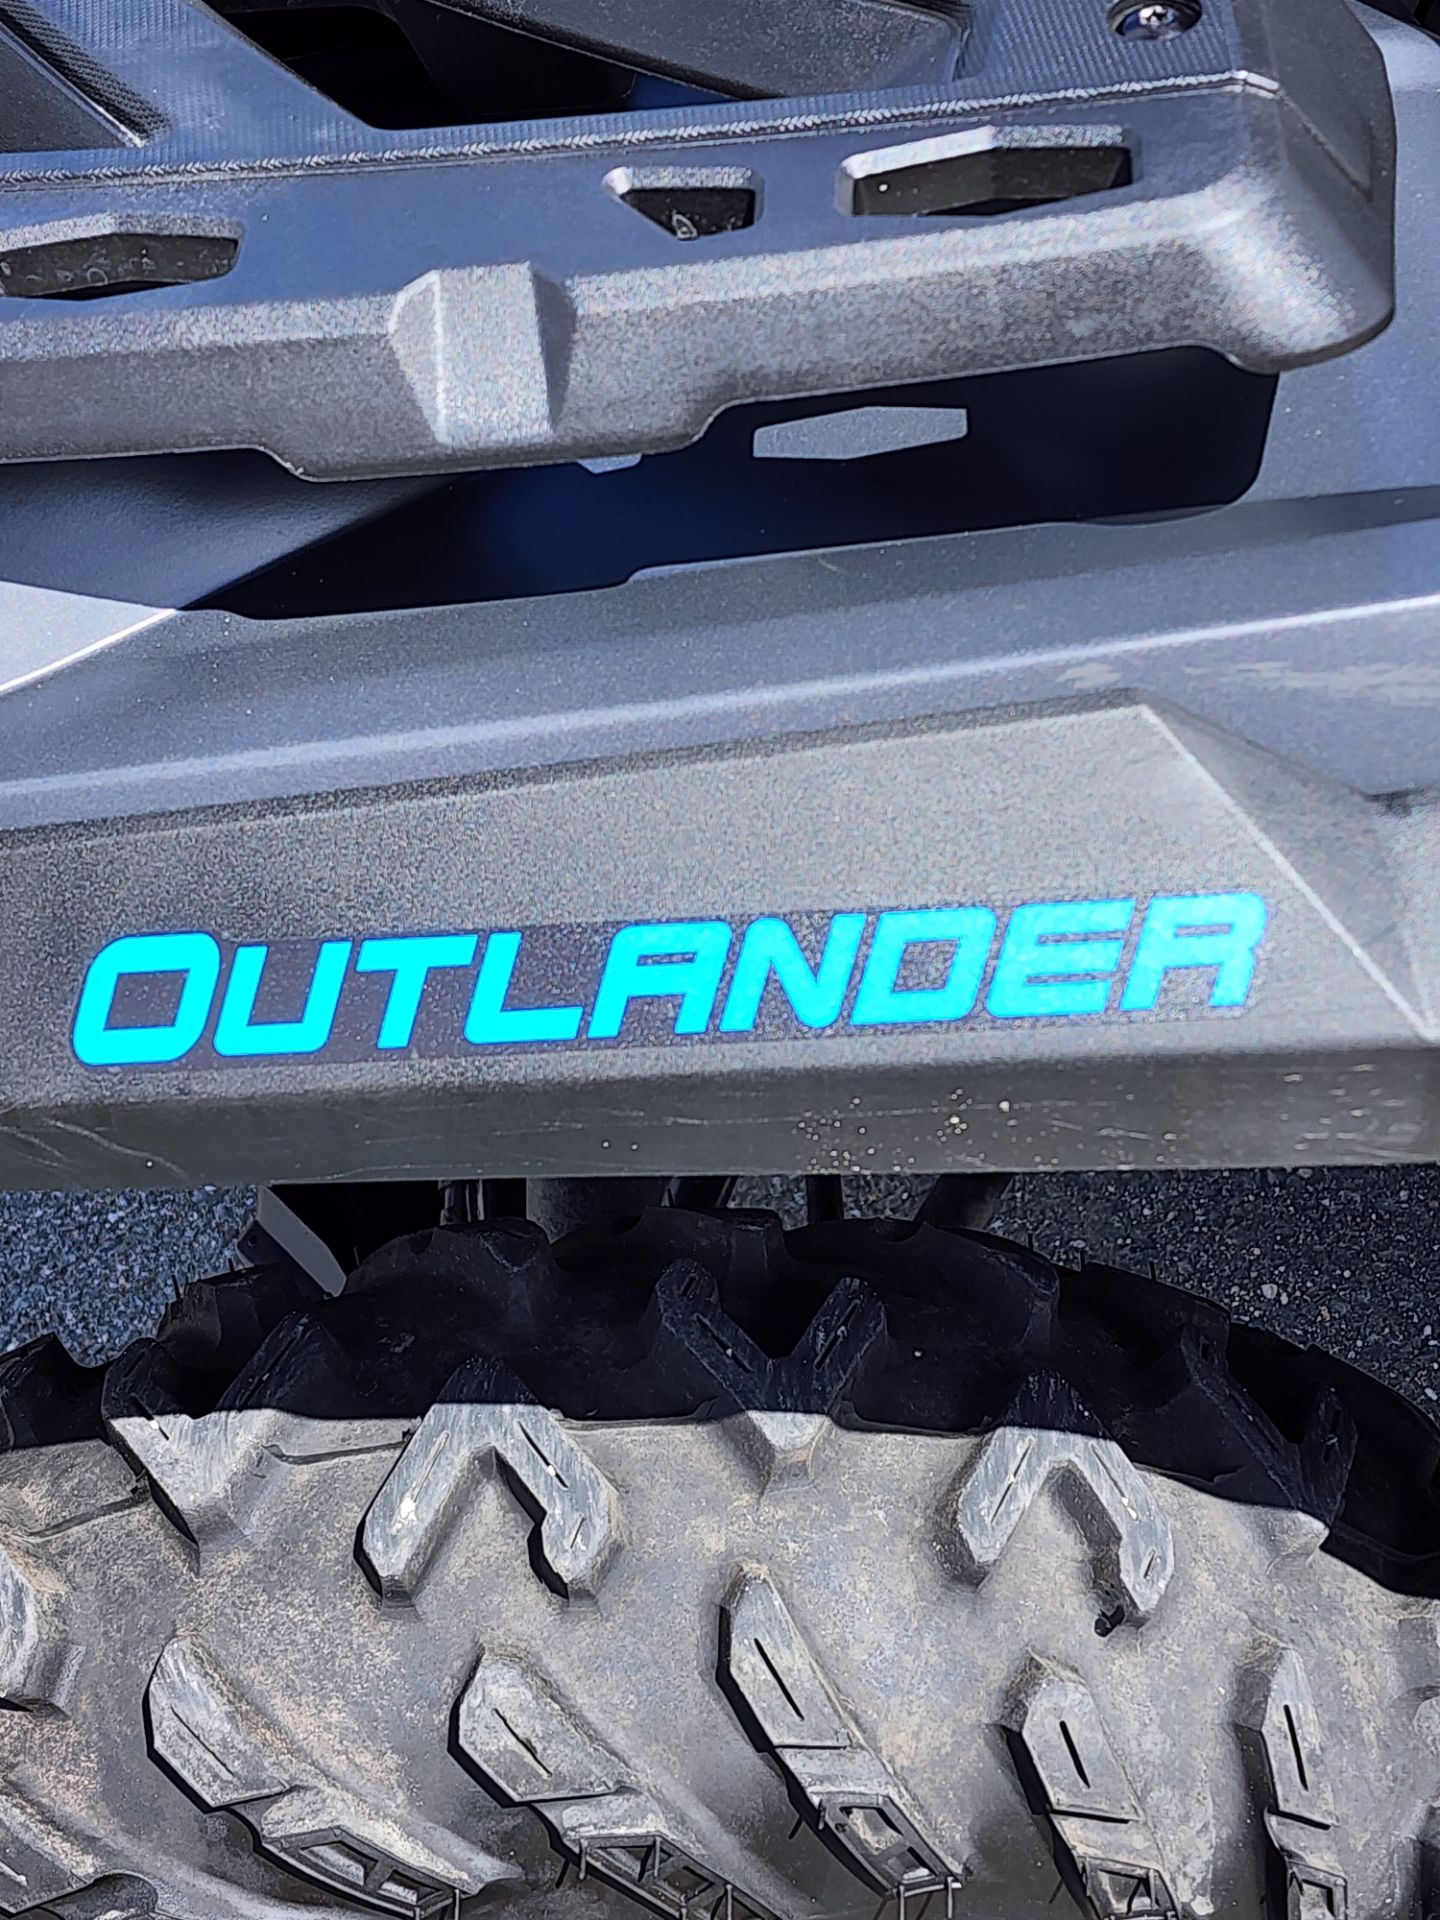 2021 Outlander XT 650 Outlander XT 650 M9698 - Click for larger photo